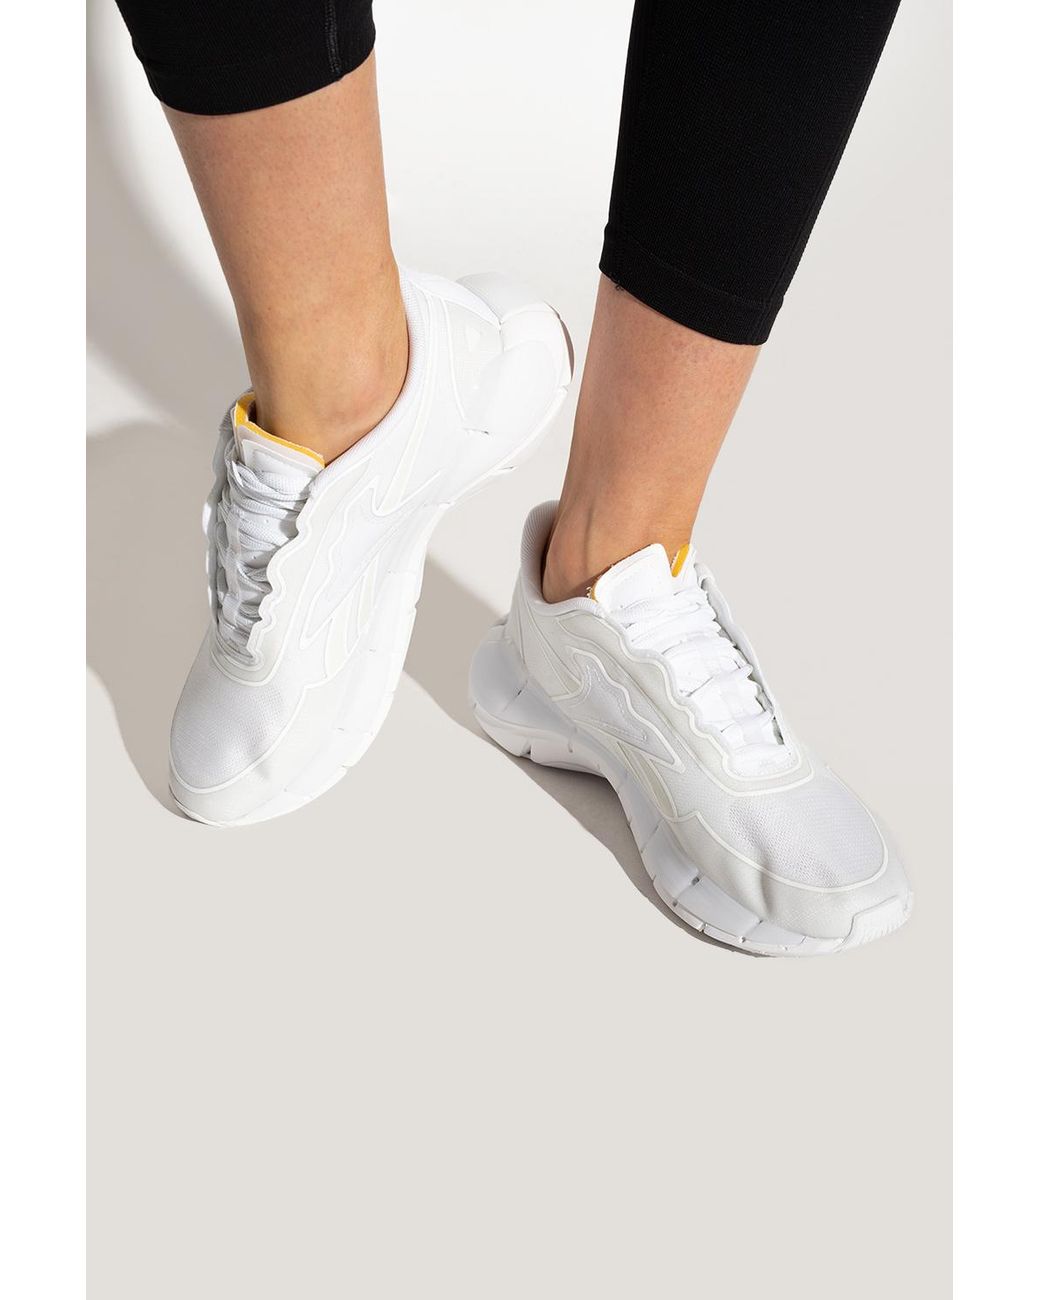 Reebok X Victoria Beckham 'zig Kinetica' Sneakers in White | Lyst UK